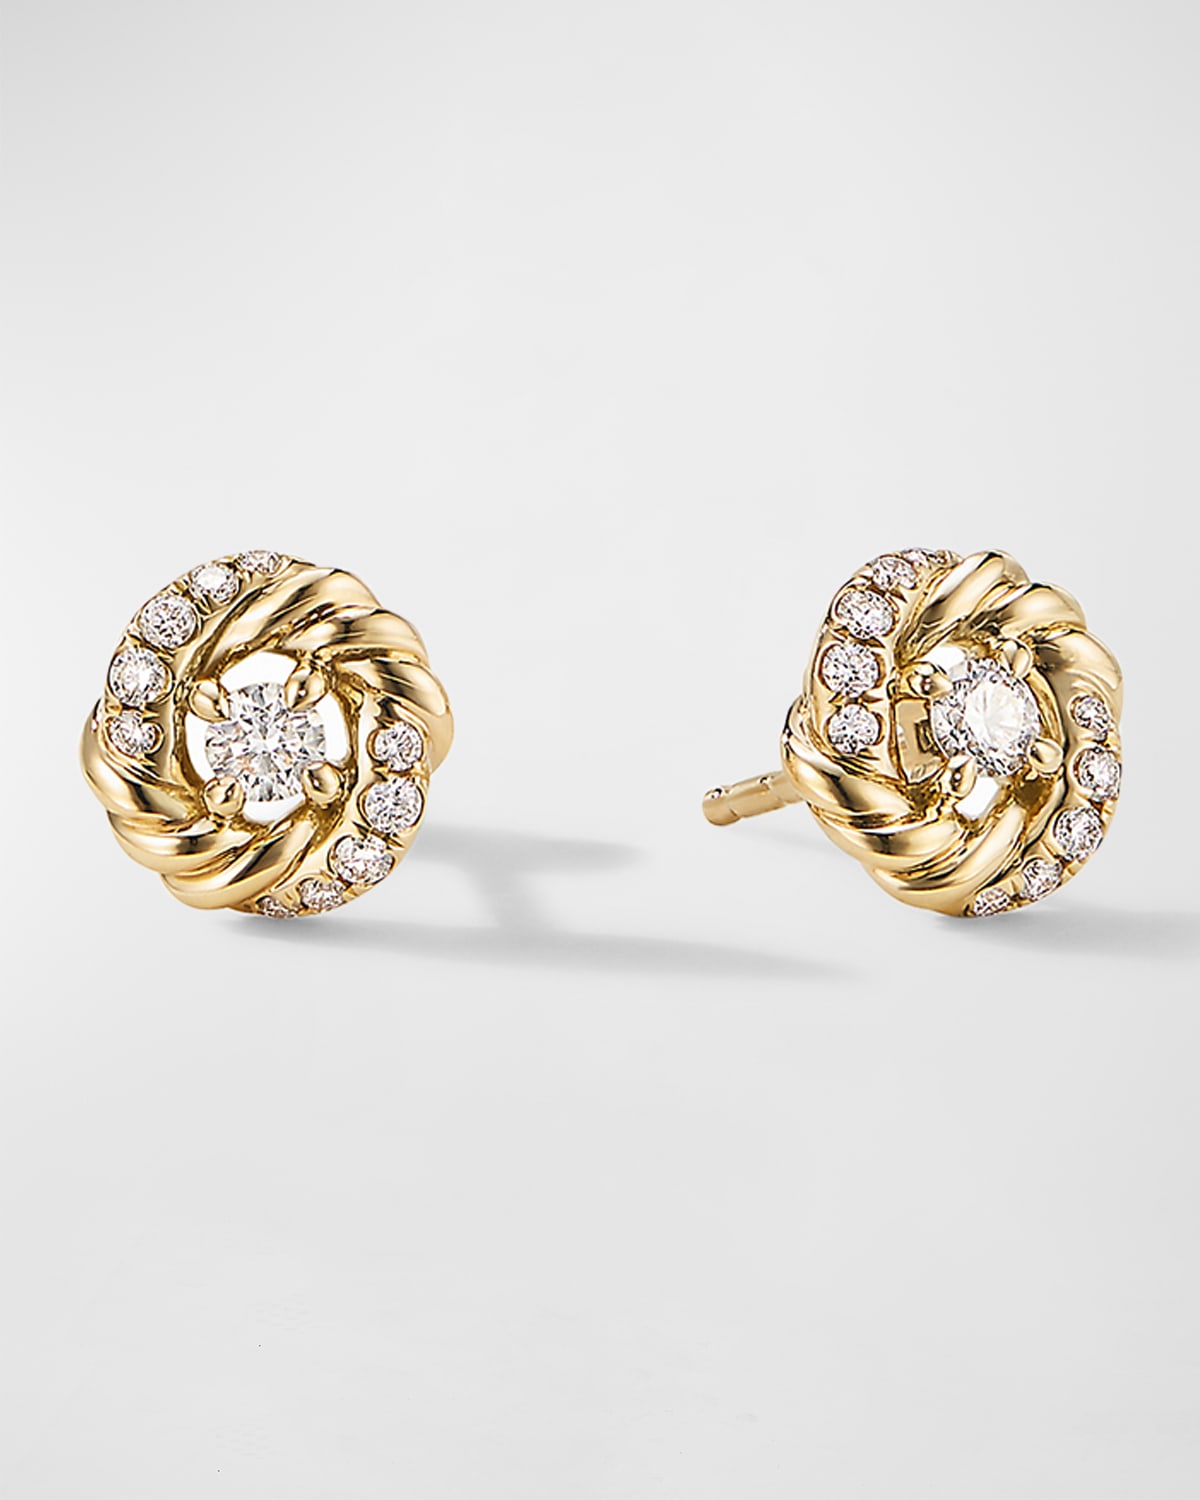 David Yurman Petite Infinity Earrings With Diamonds In 18k Gold, 8mm